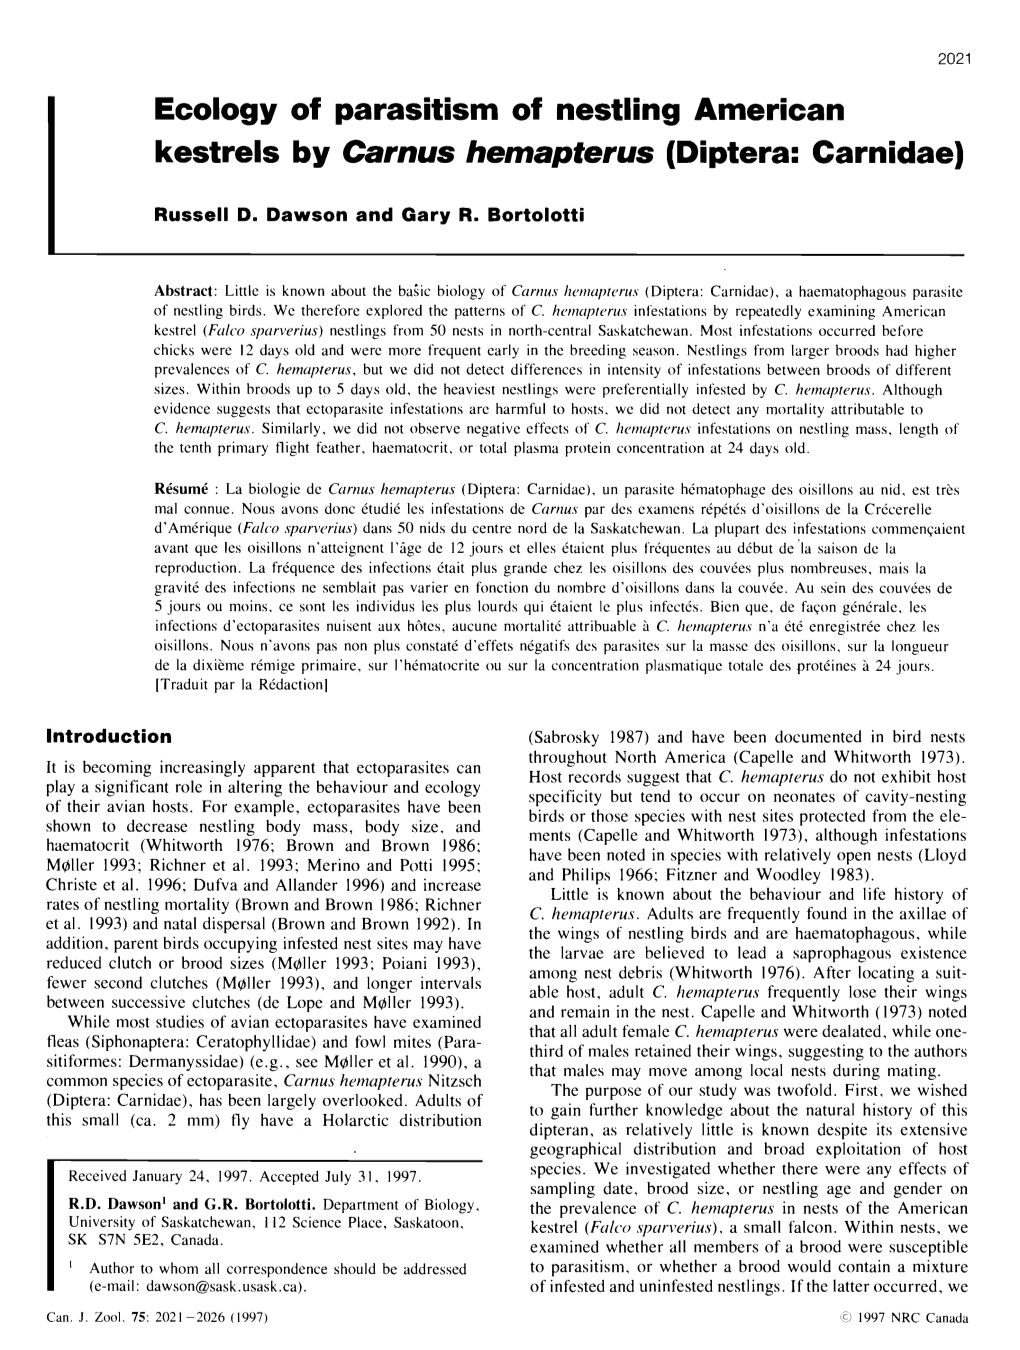 Ecology of Parasitism of Nestling American Kestrels by Carnus Hemapterus (Diptera: Carnidae)